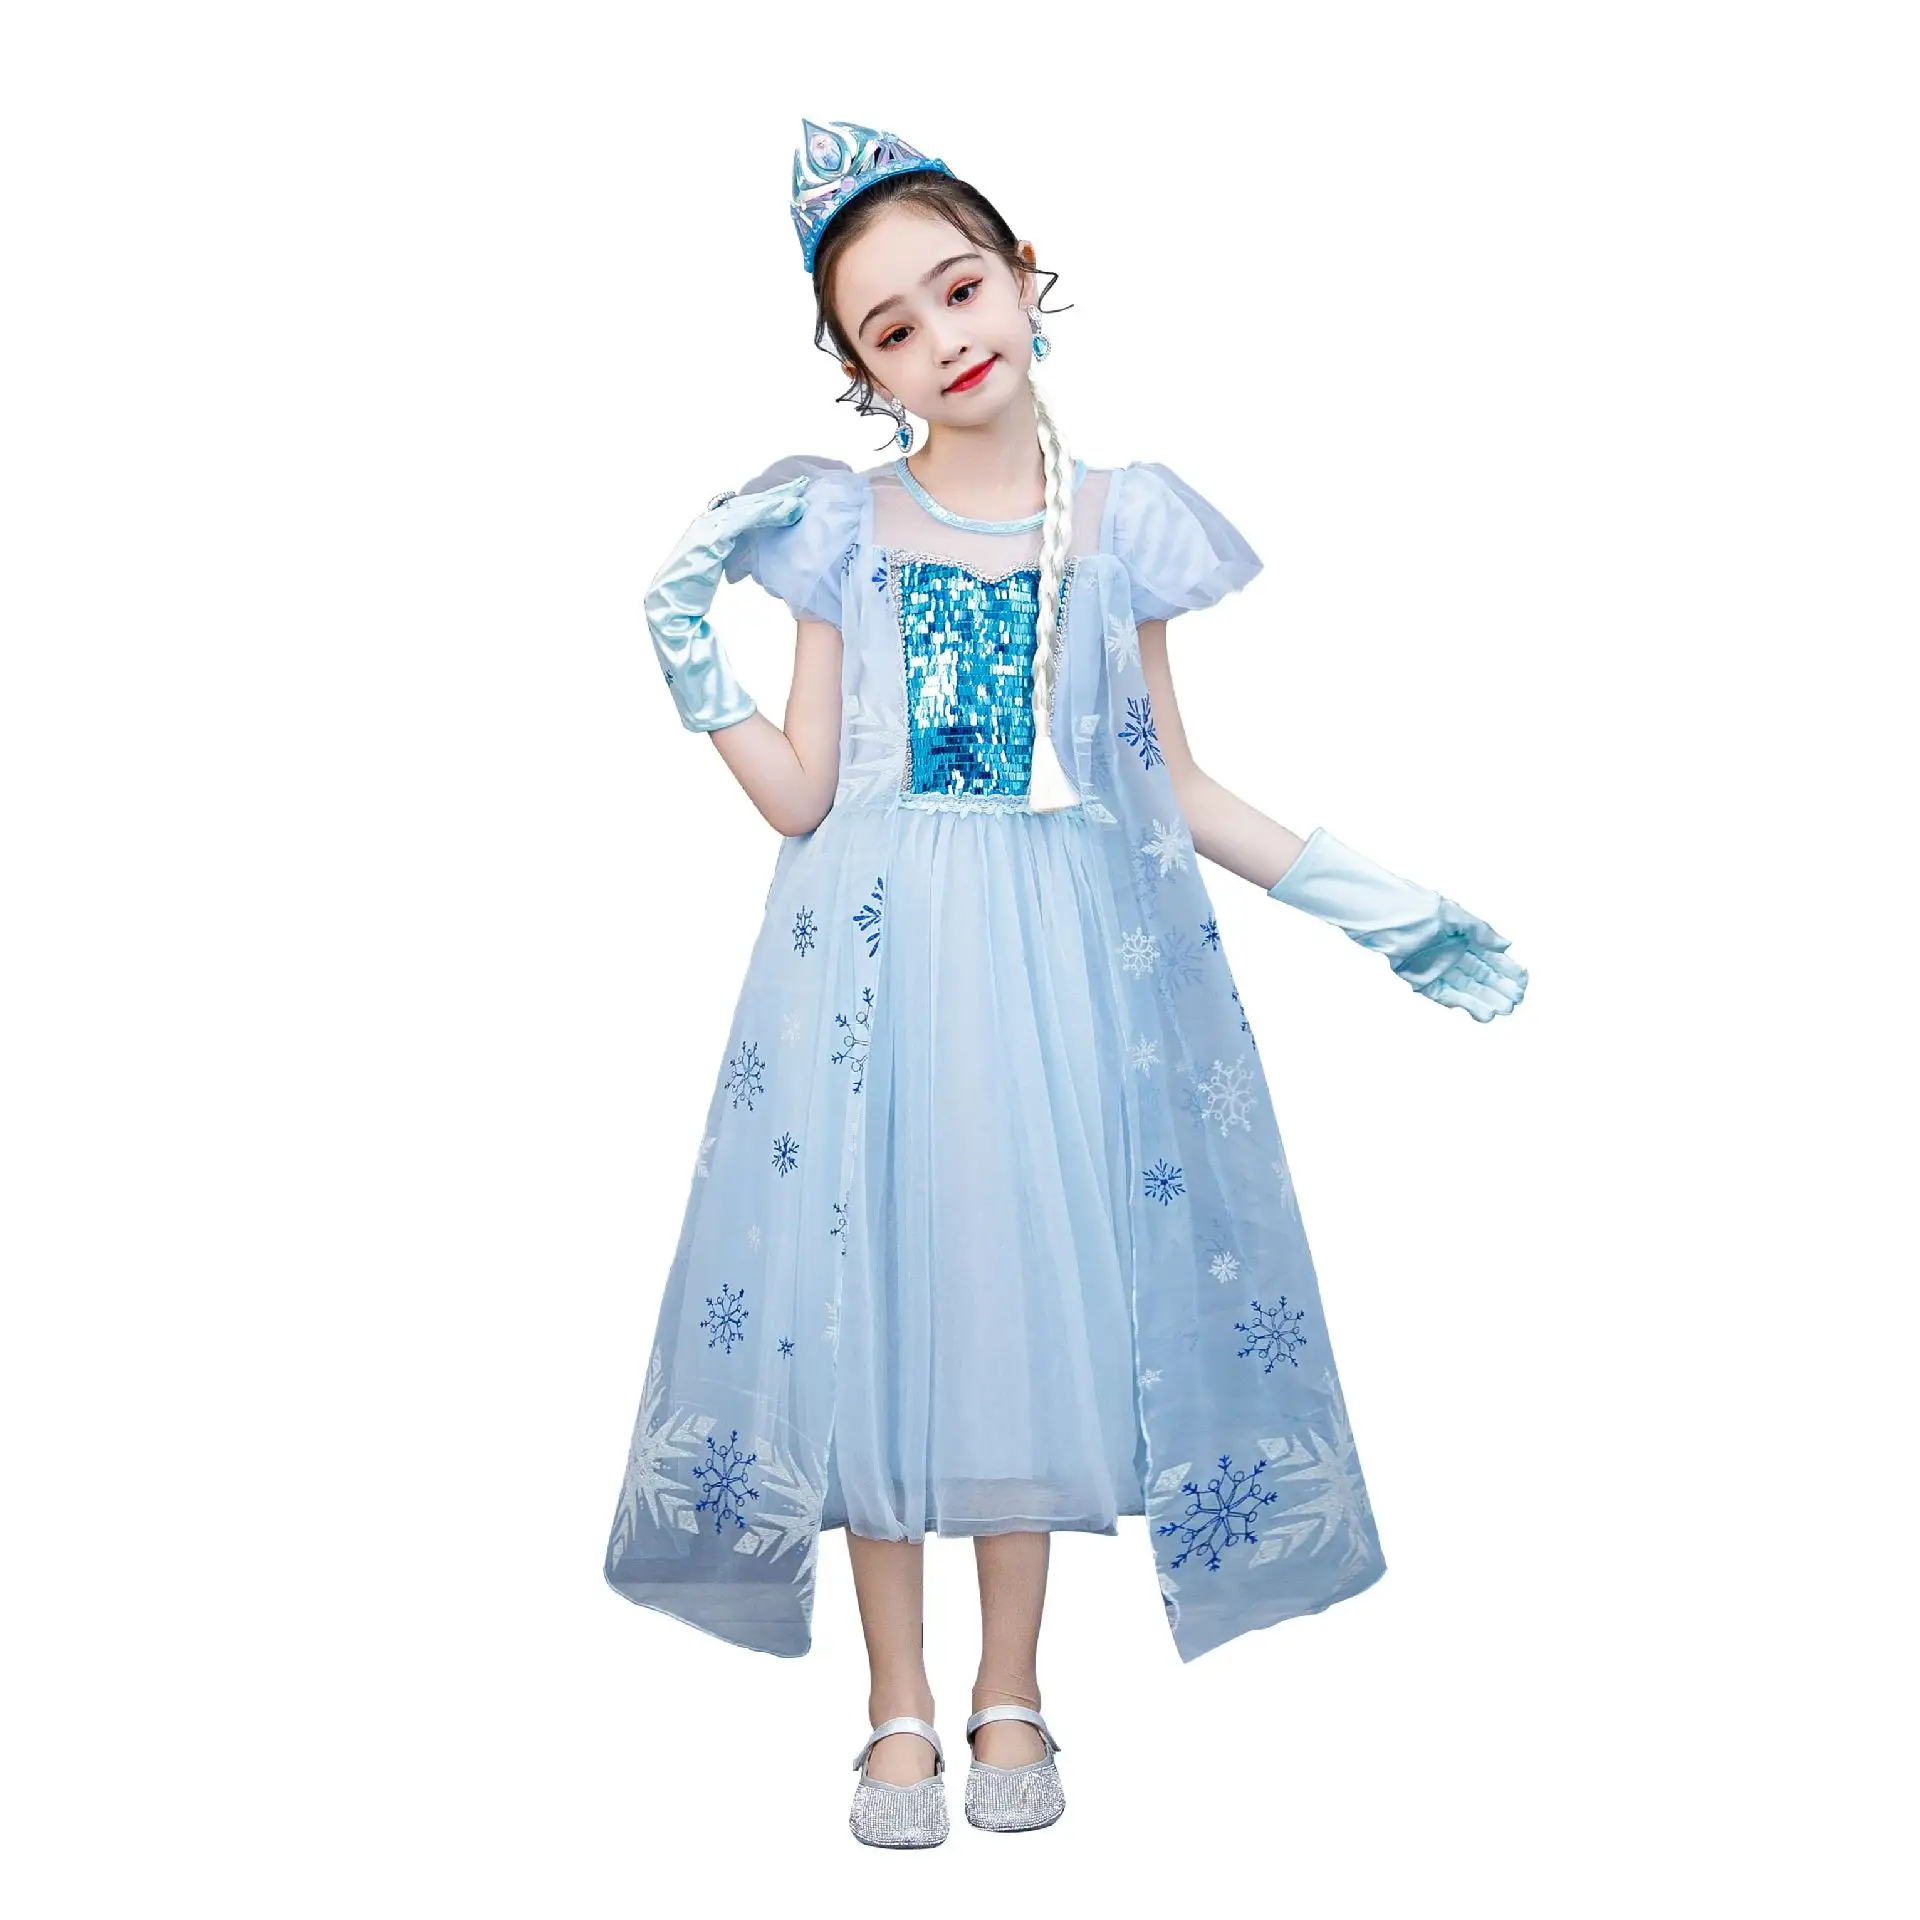 Vestido de fantasia, moda anna vestido curto manga bufante azul lantejoulas neve elsa halloween cosplay vestido para meninas